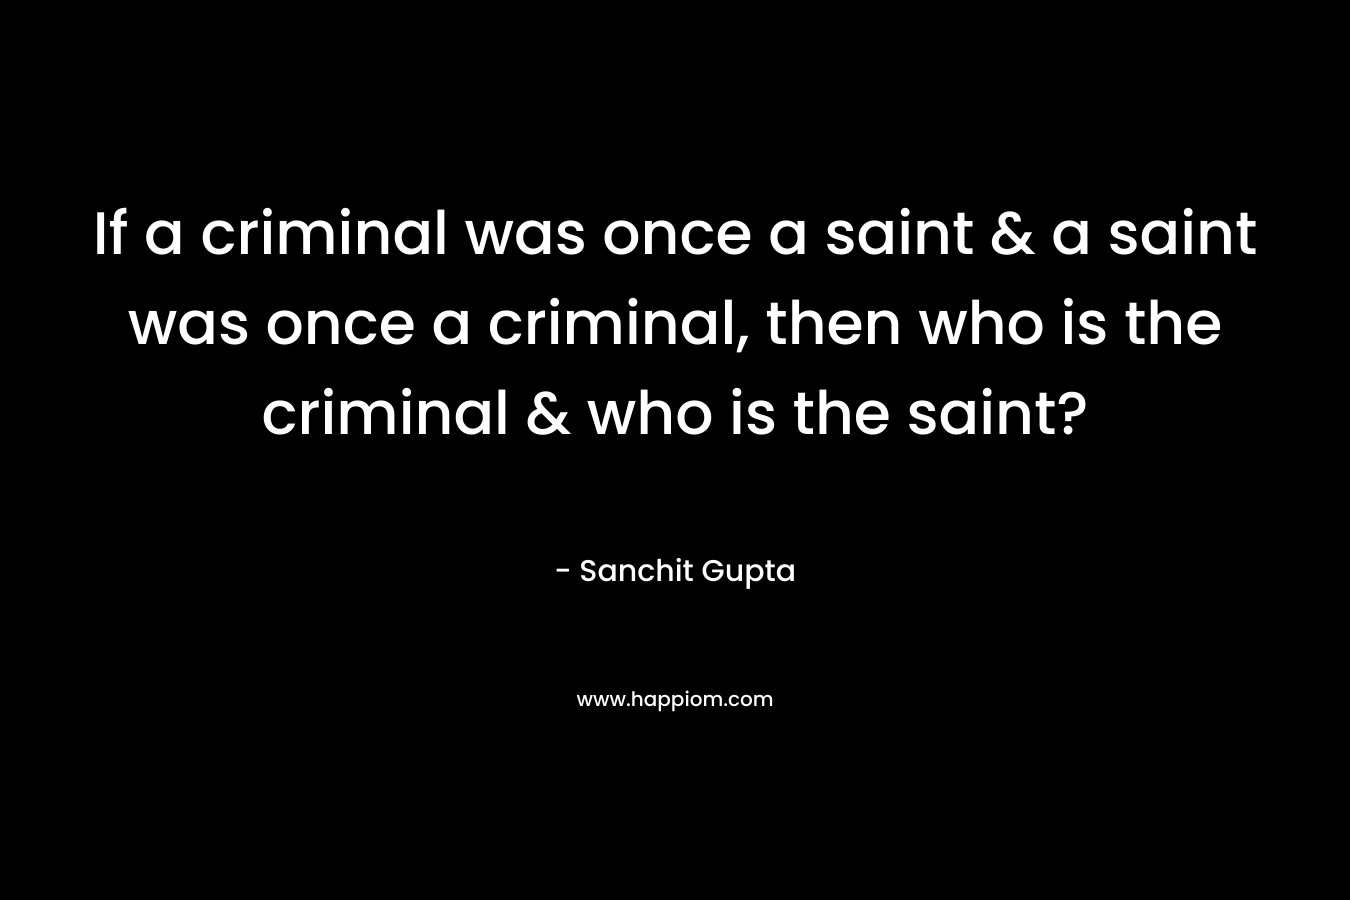 If a criminal was once a saint & a saint was once a criminal, then who is the criminal & who is the saint?